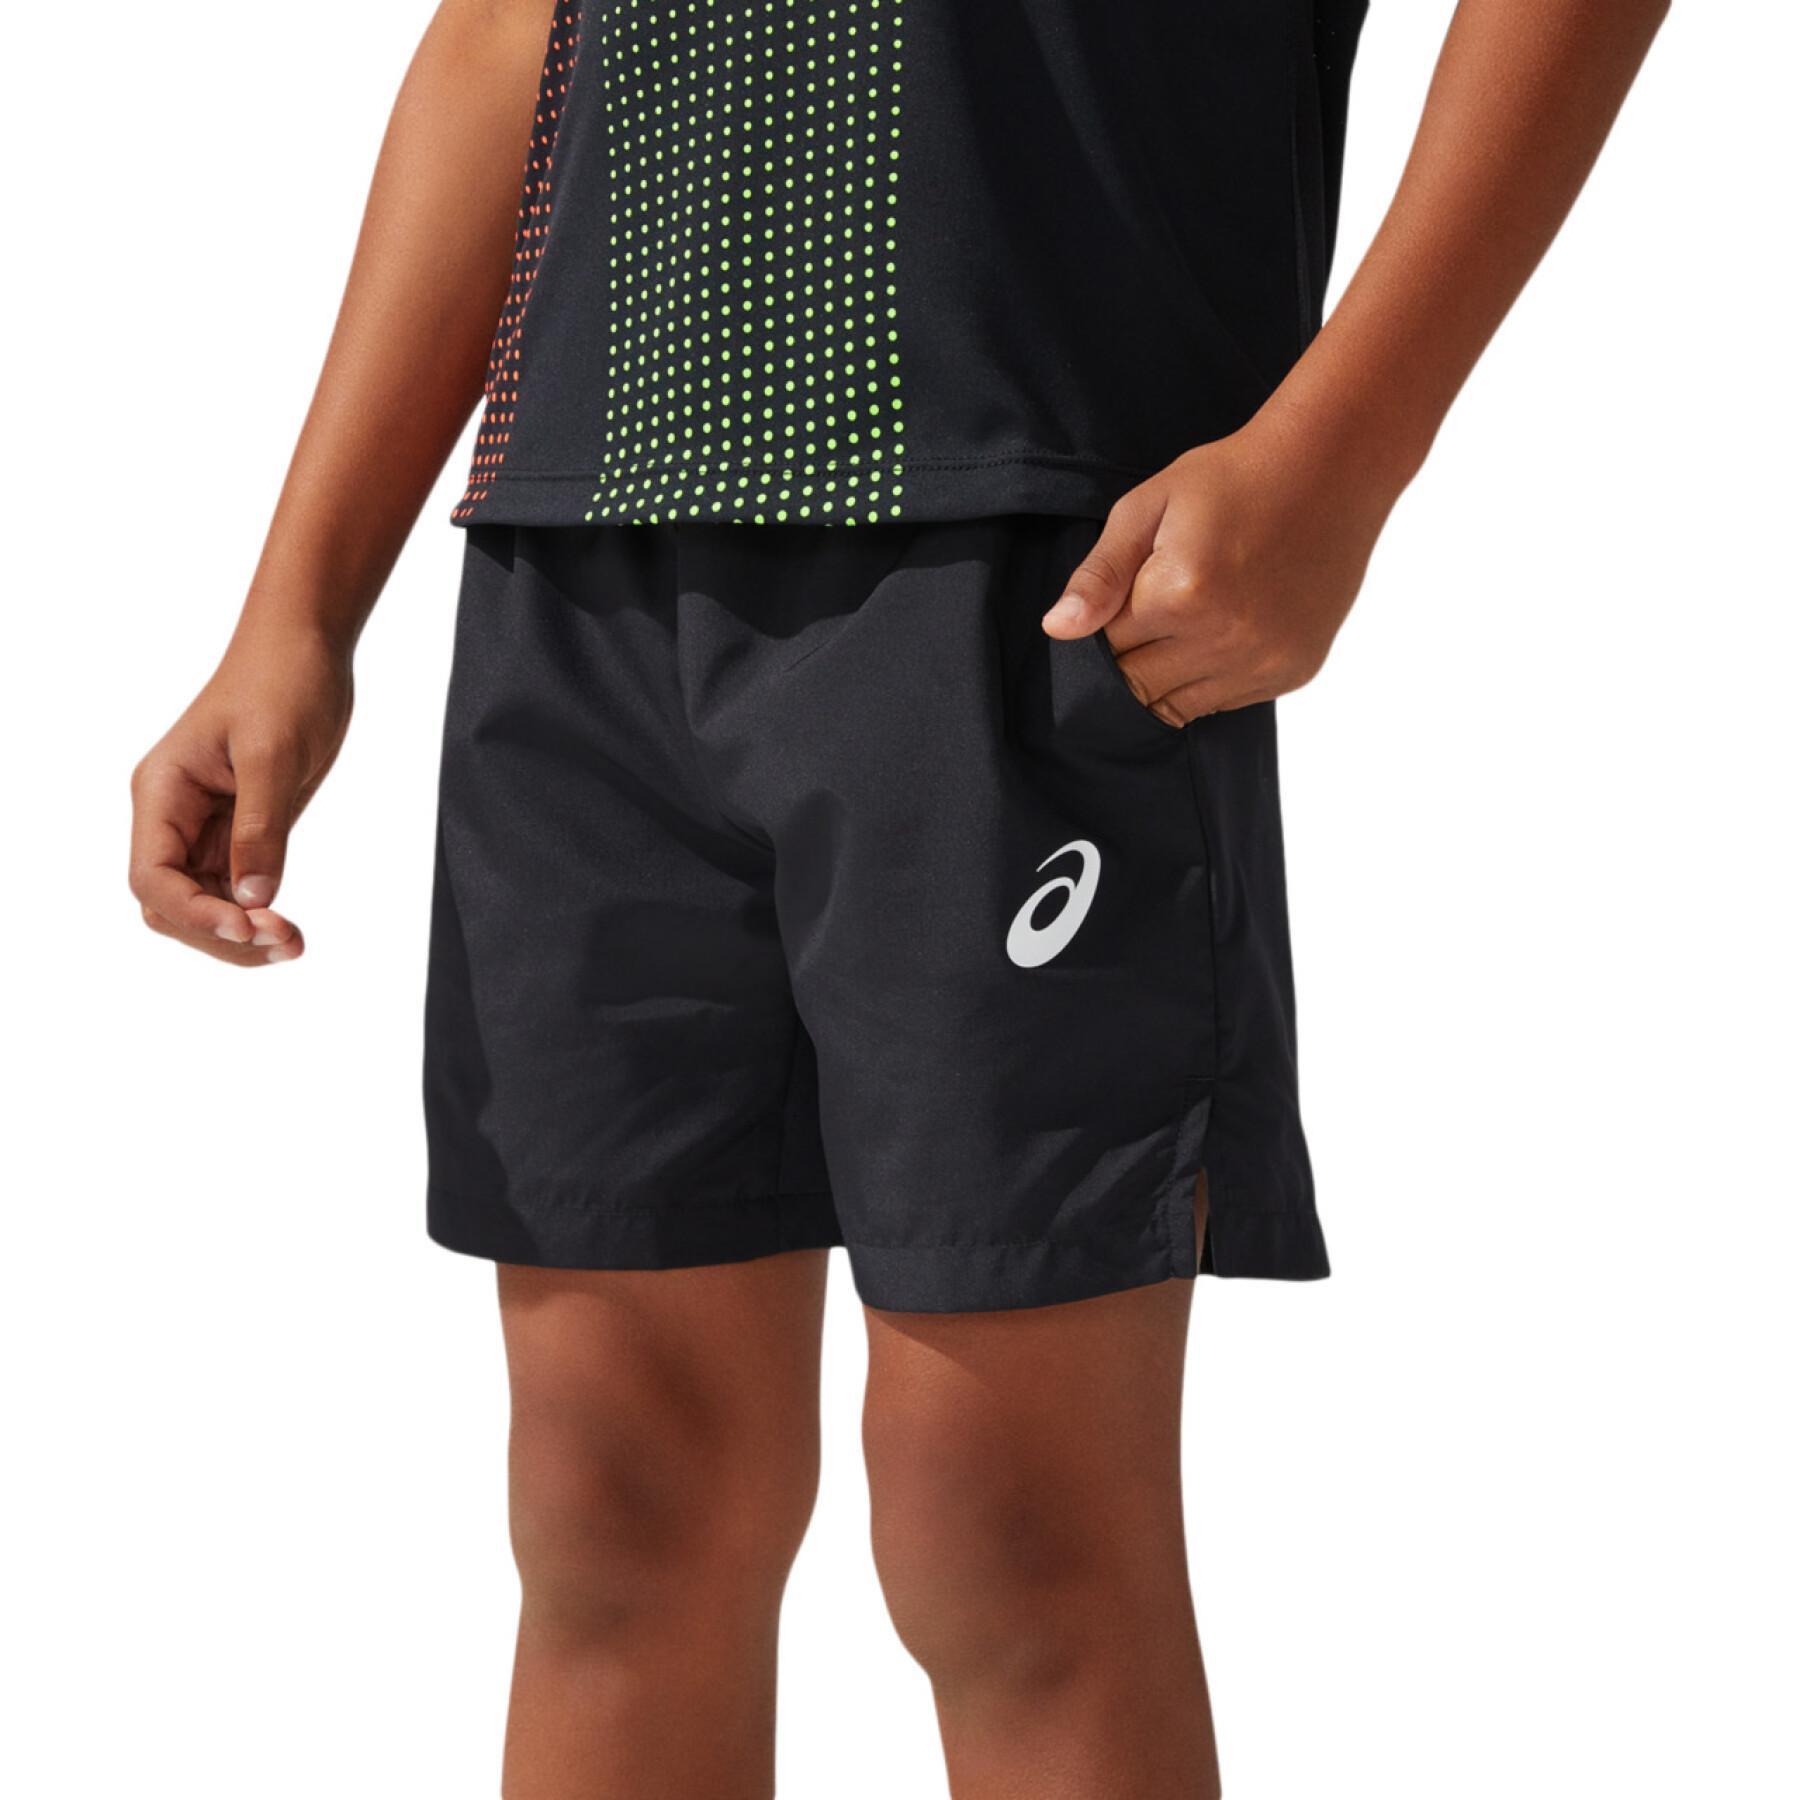 Children's shorts Asics Tennis B